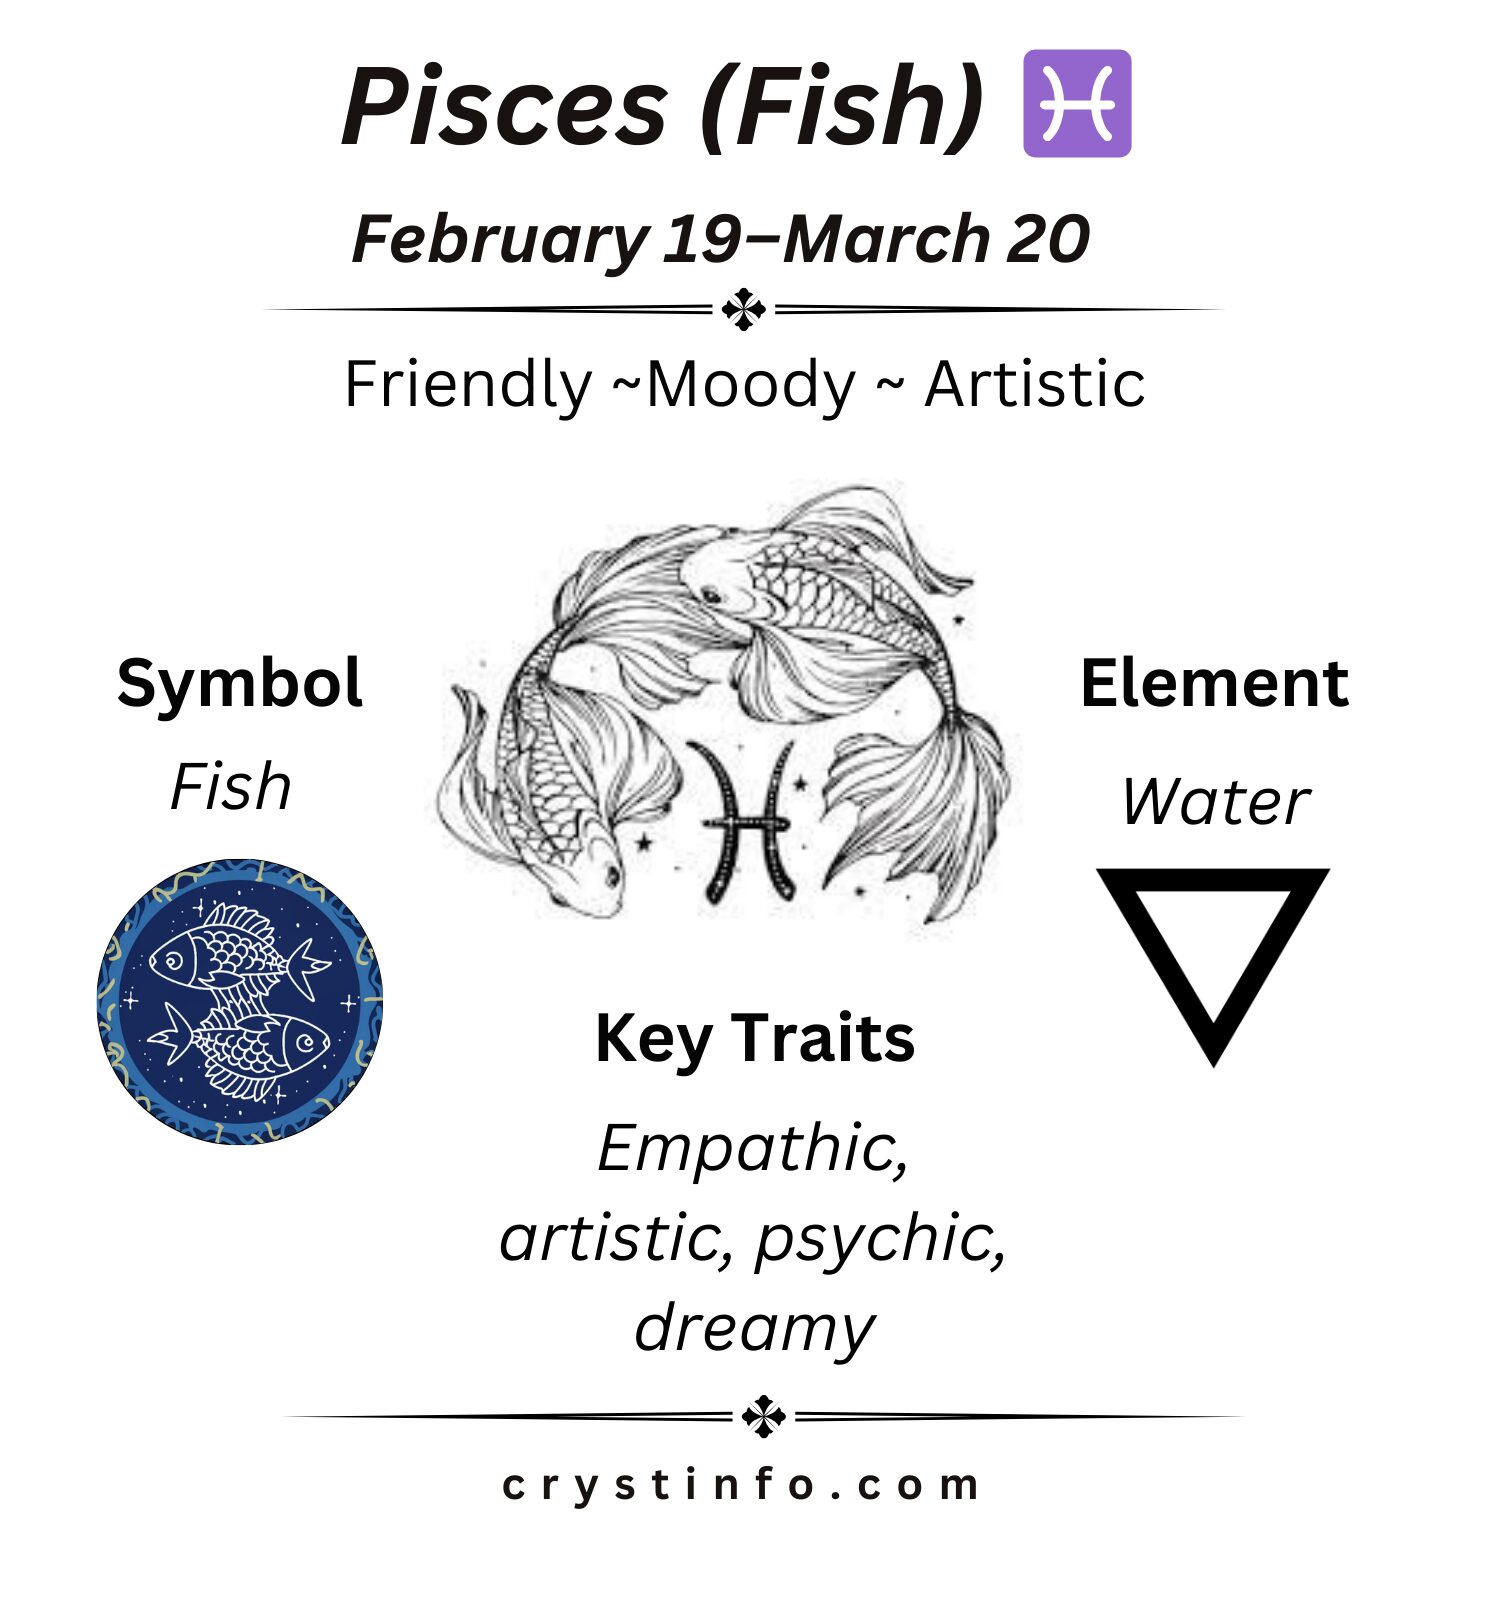 Pisces (Fish) crystinfo.com